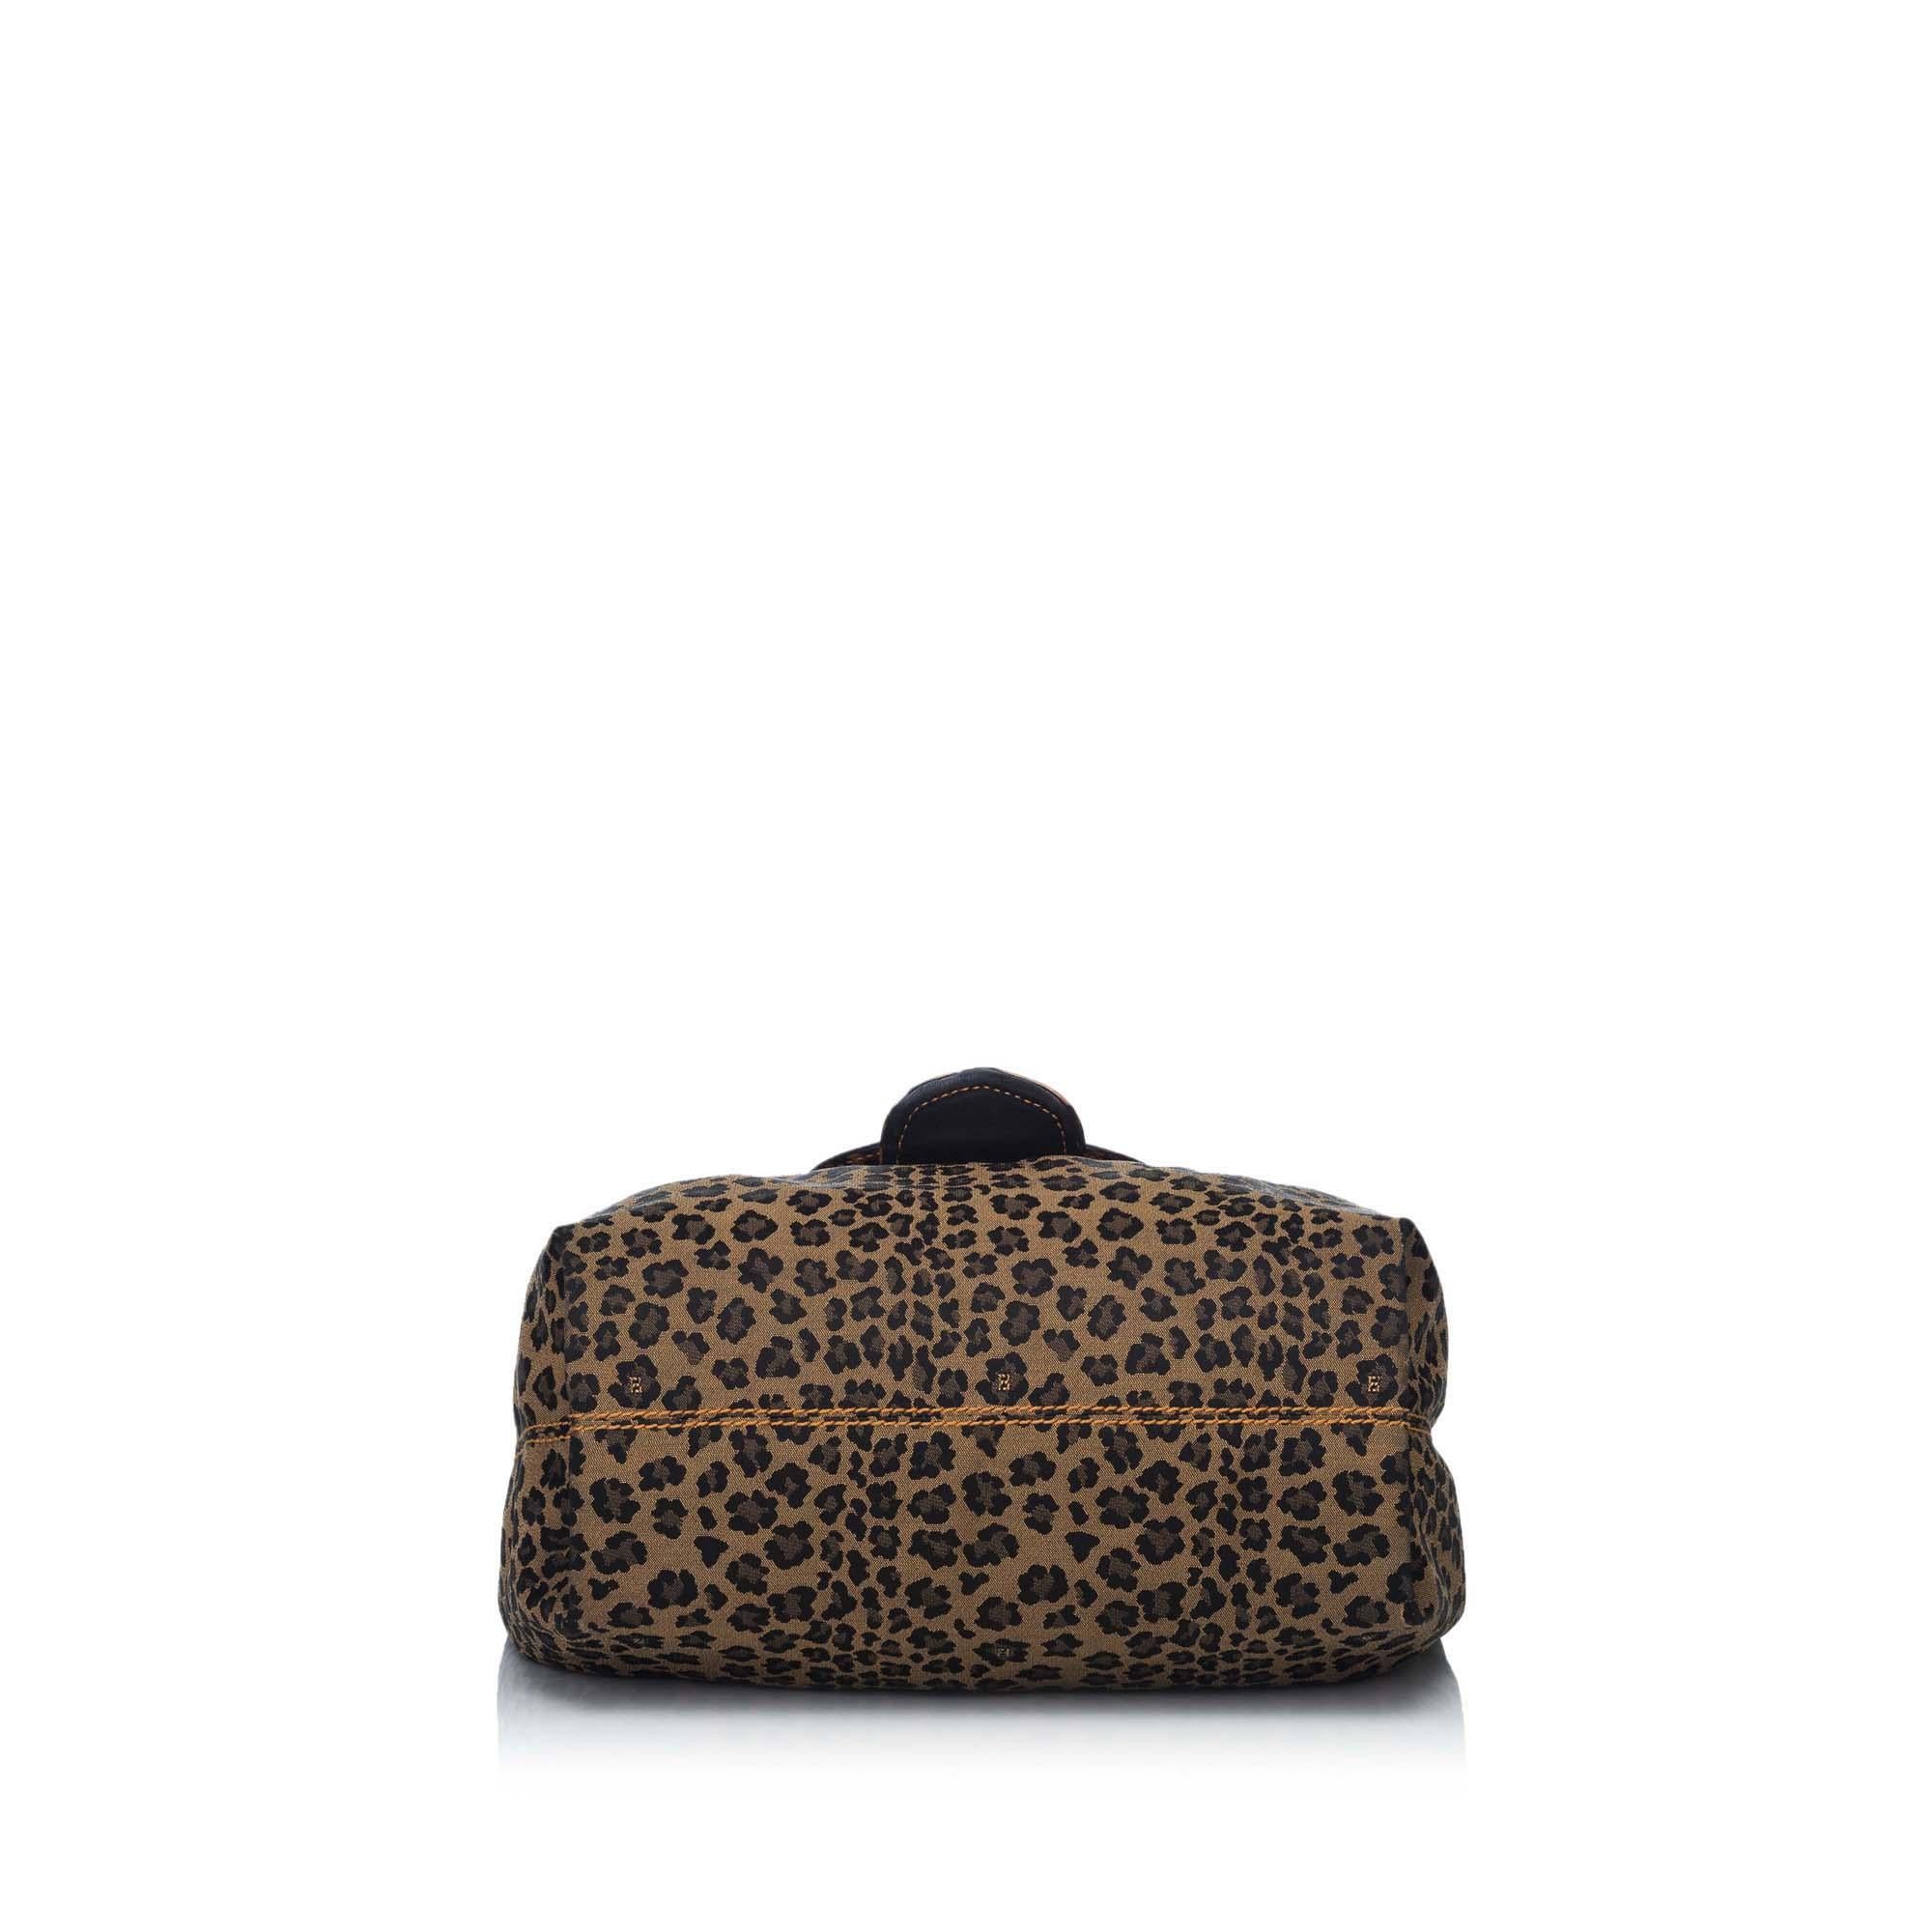 Black Fendi Leopard Print Hobo Bag